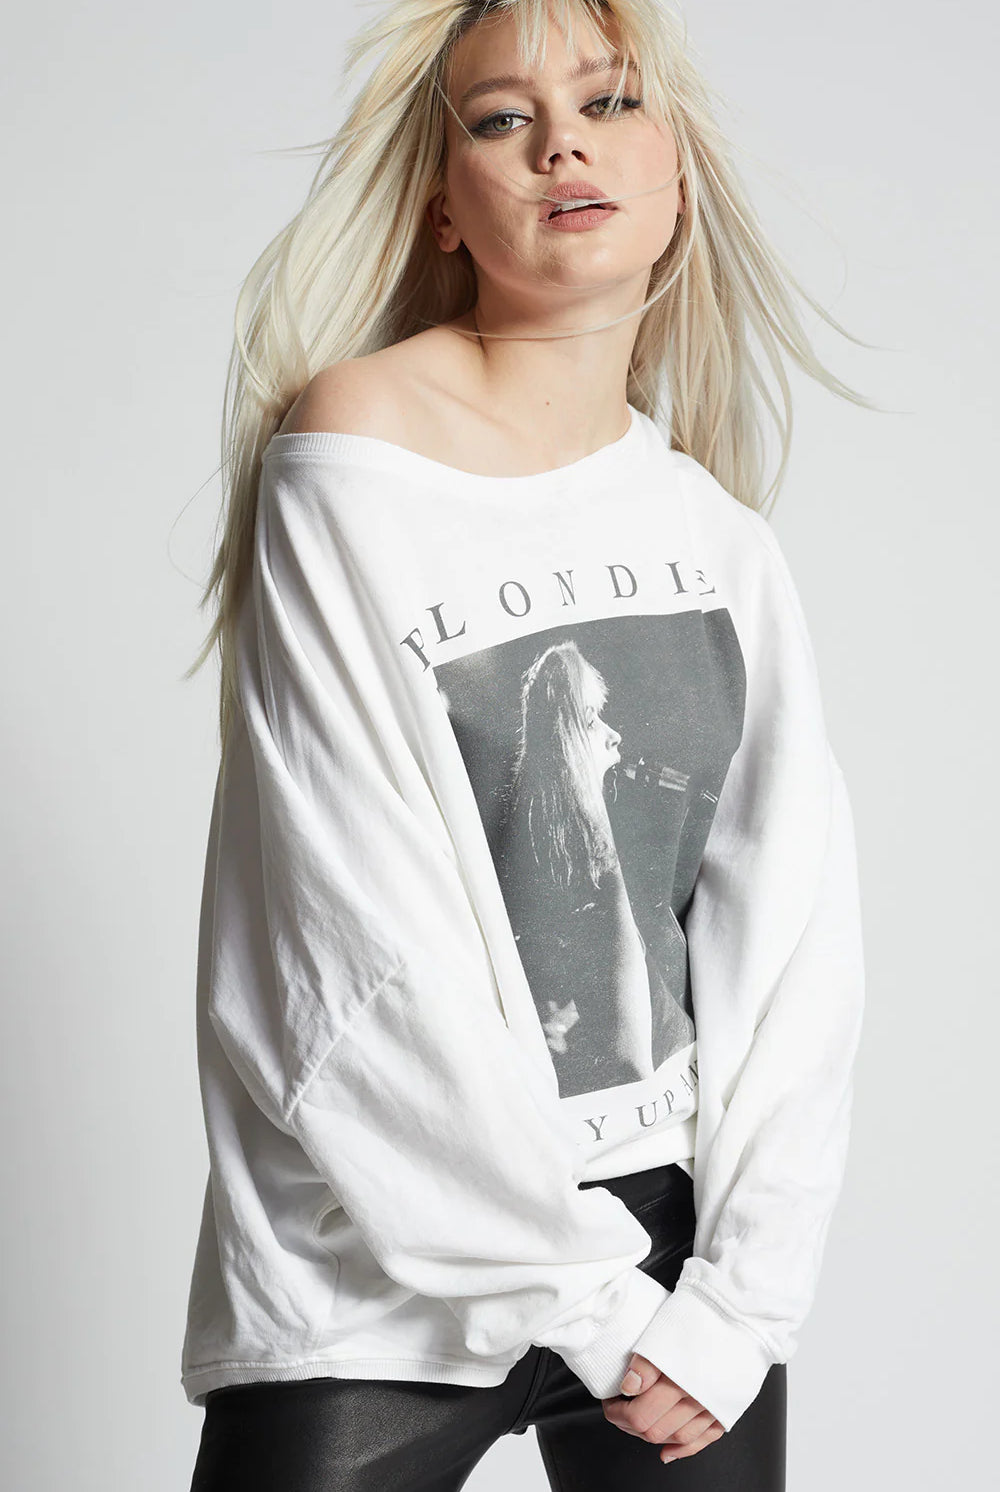 Blondie Hurry Up And Wait Sweatshirt-Sweatshirt-UrbanCulture-Boutique, A North Port, Florida Women's Fashion Boutique